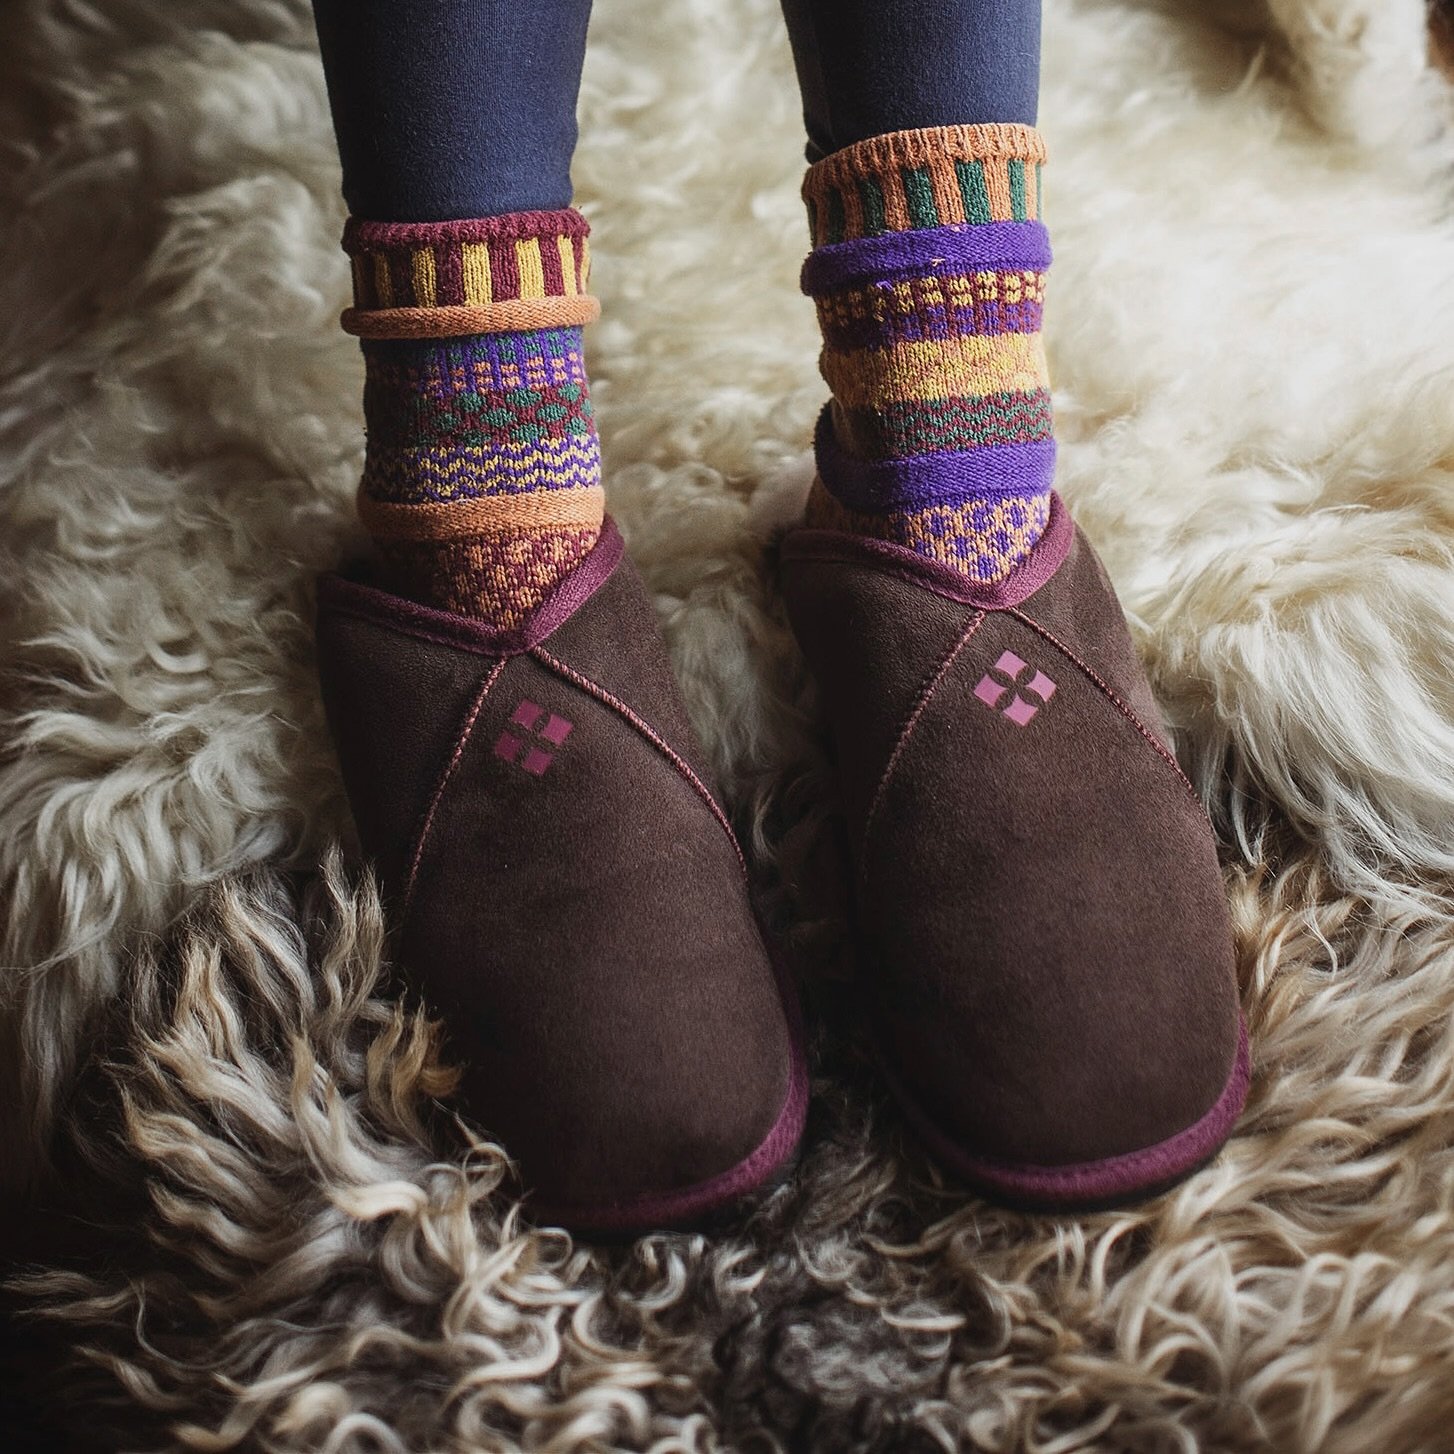 xanthe anna_sheepskin slippers.jpg